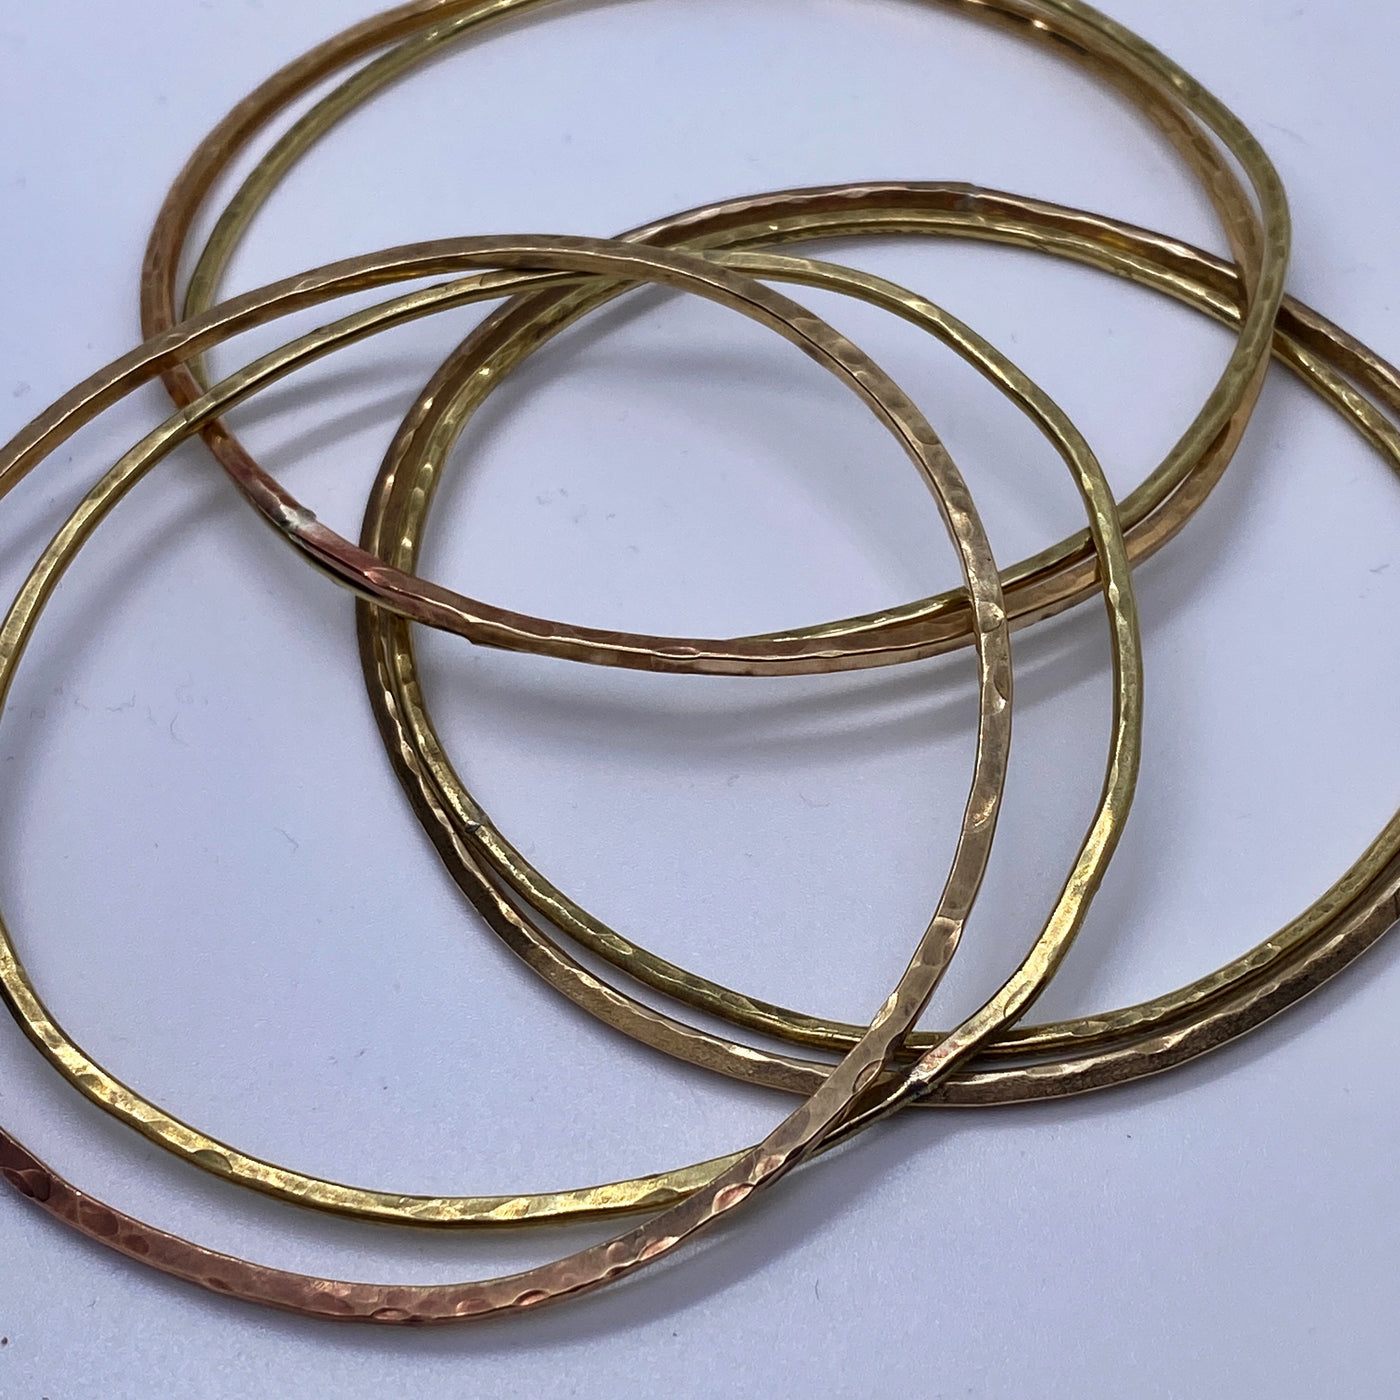 Brass stackable bracelets. Sold separately or all together